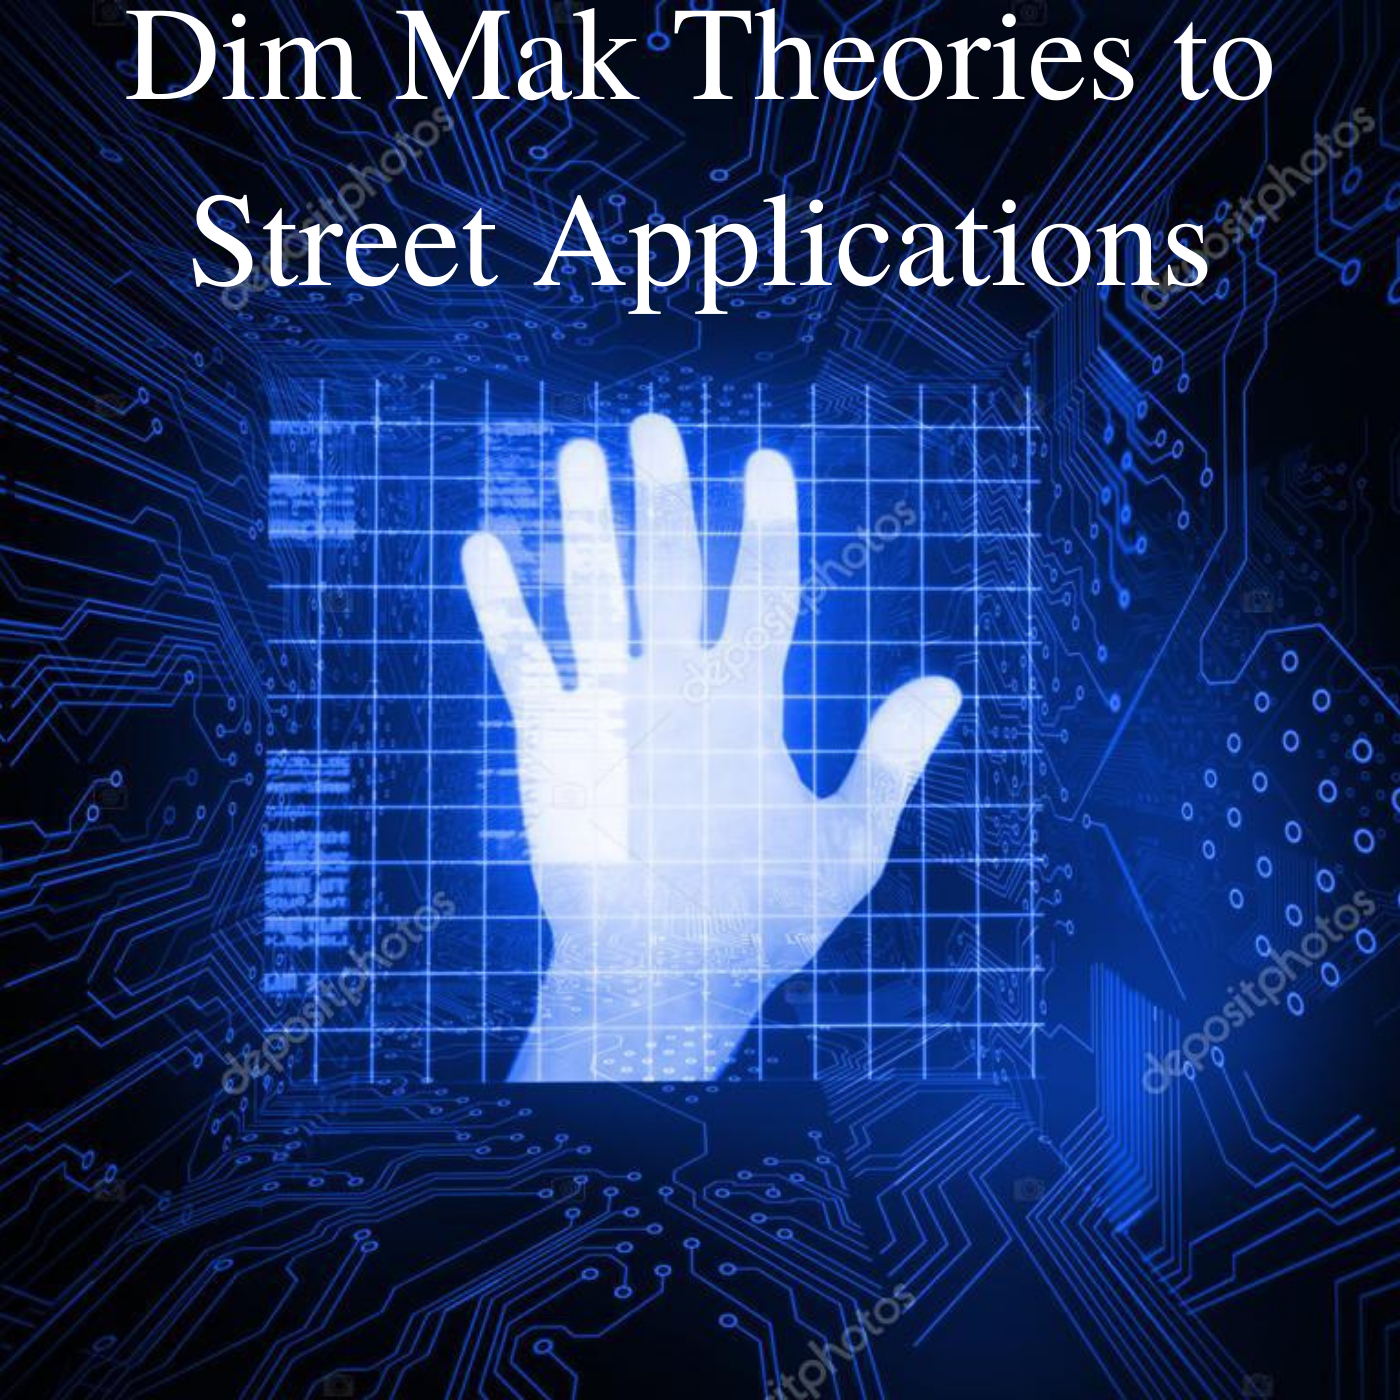 Dim Mak Theories to Street Applications